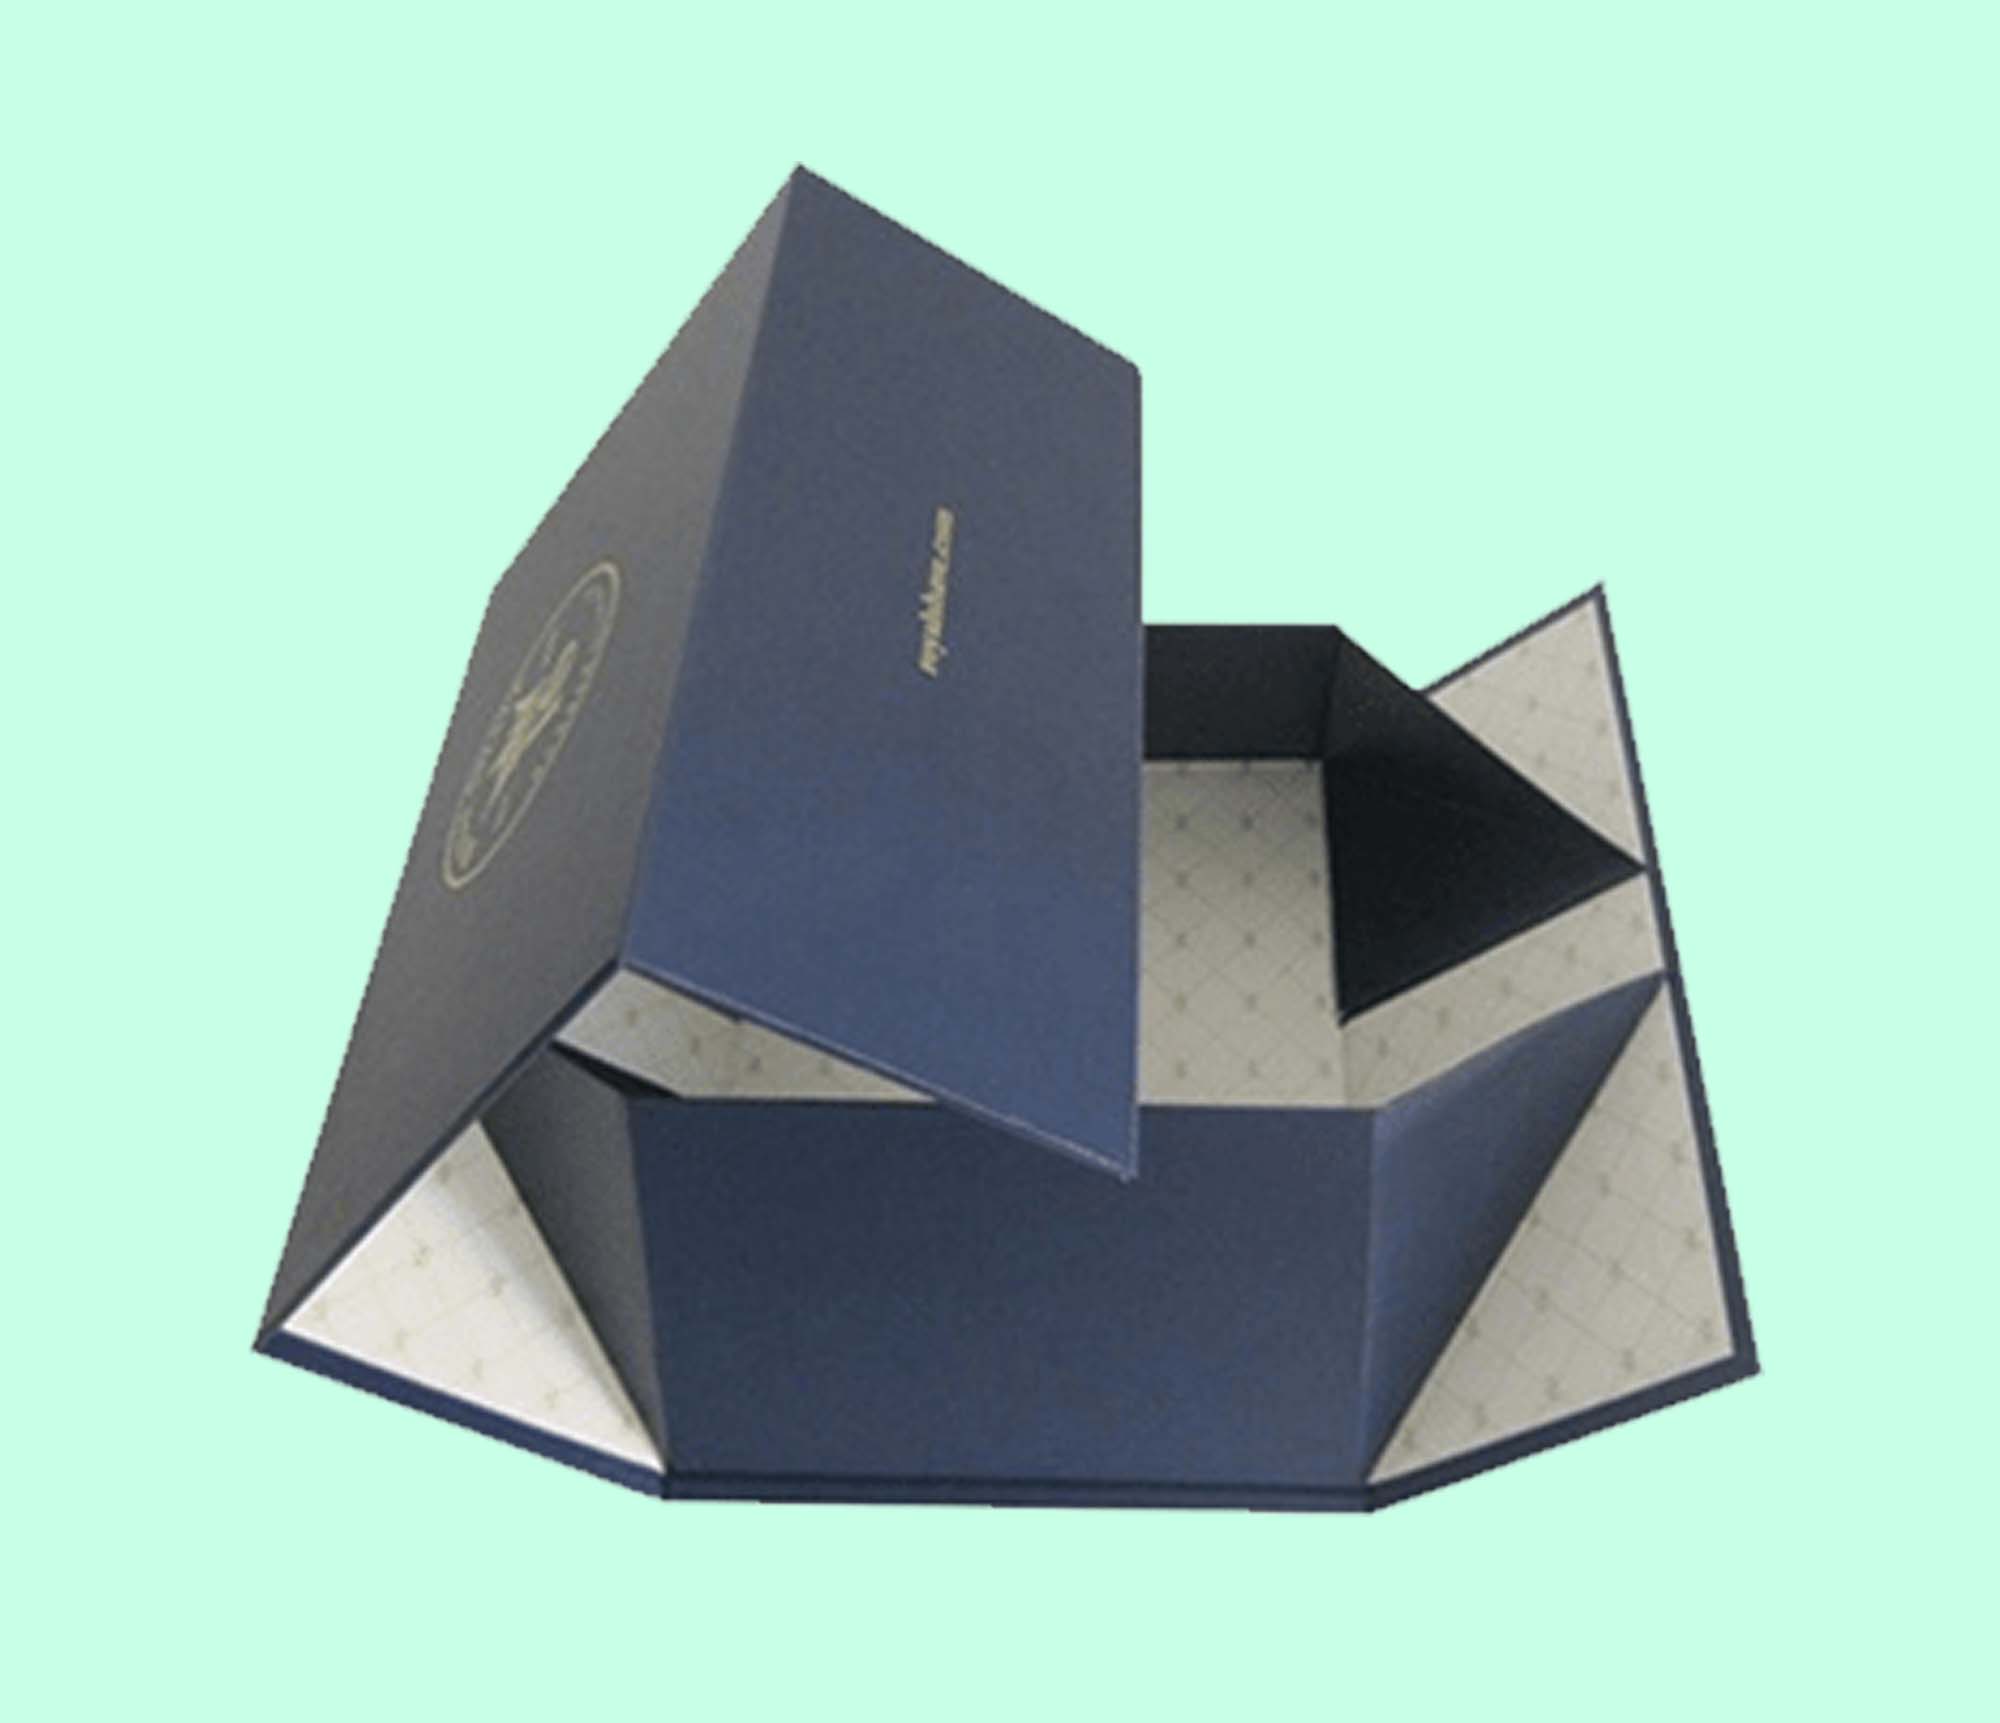 Foldable Rigid boxes